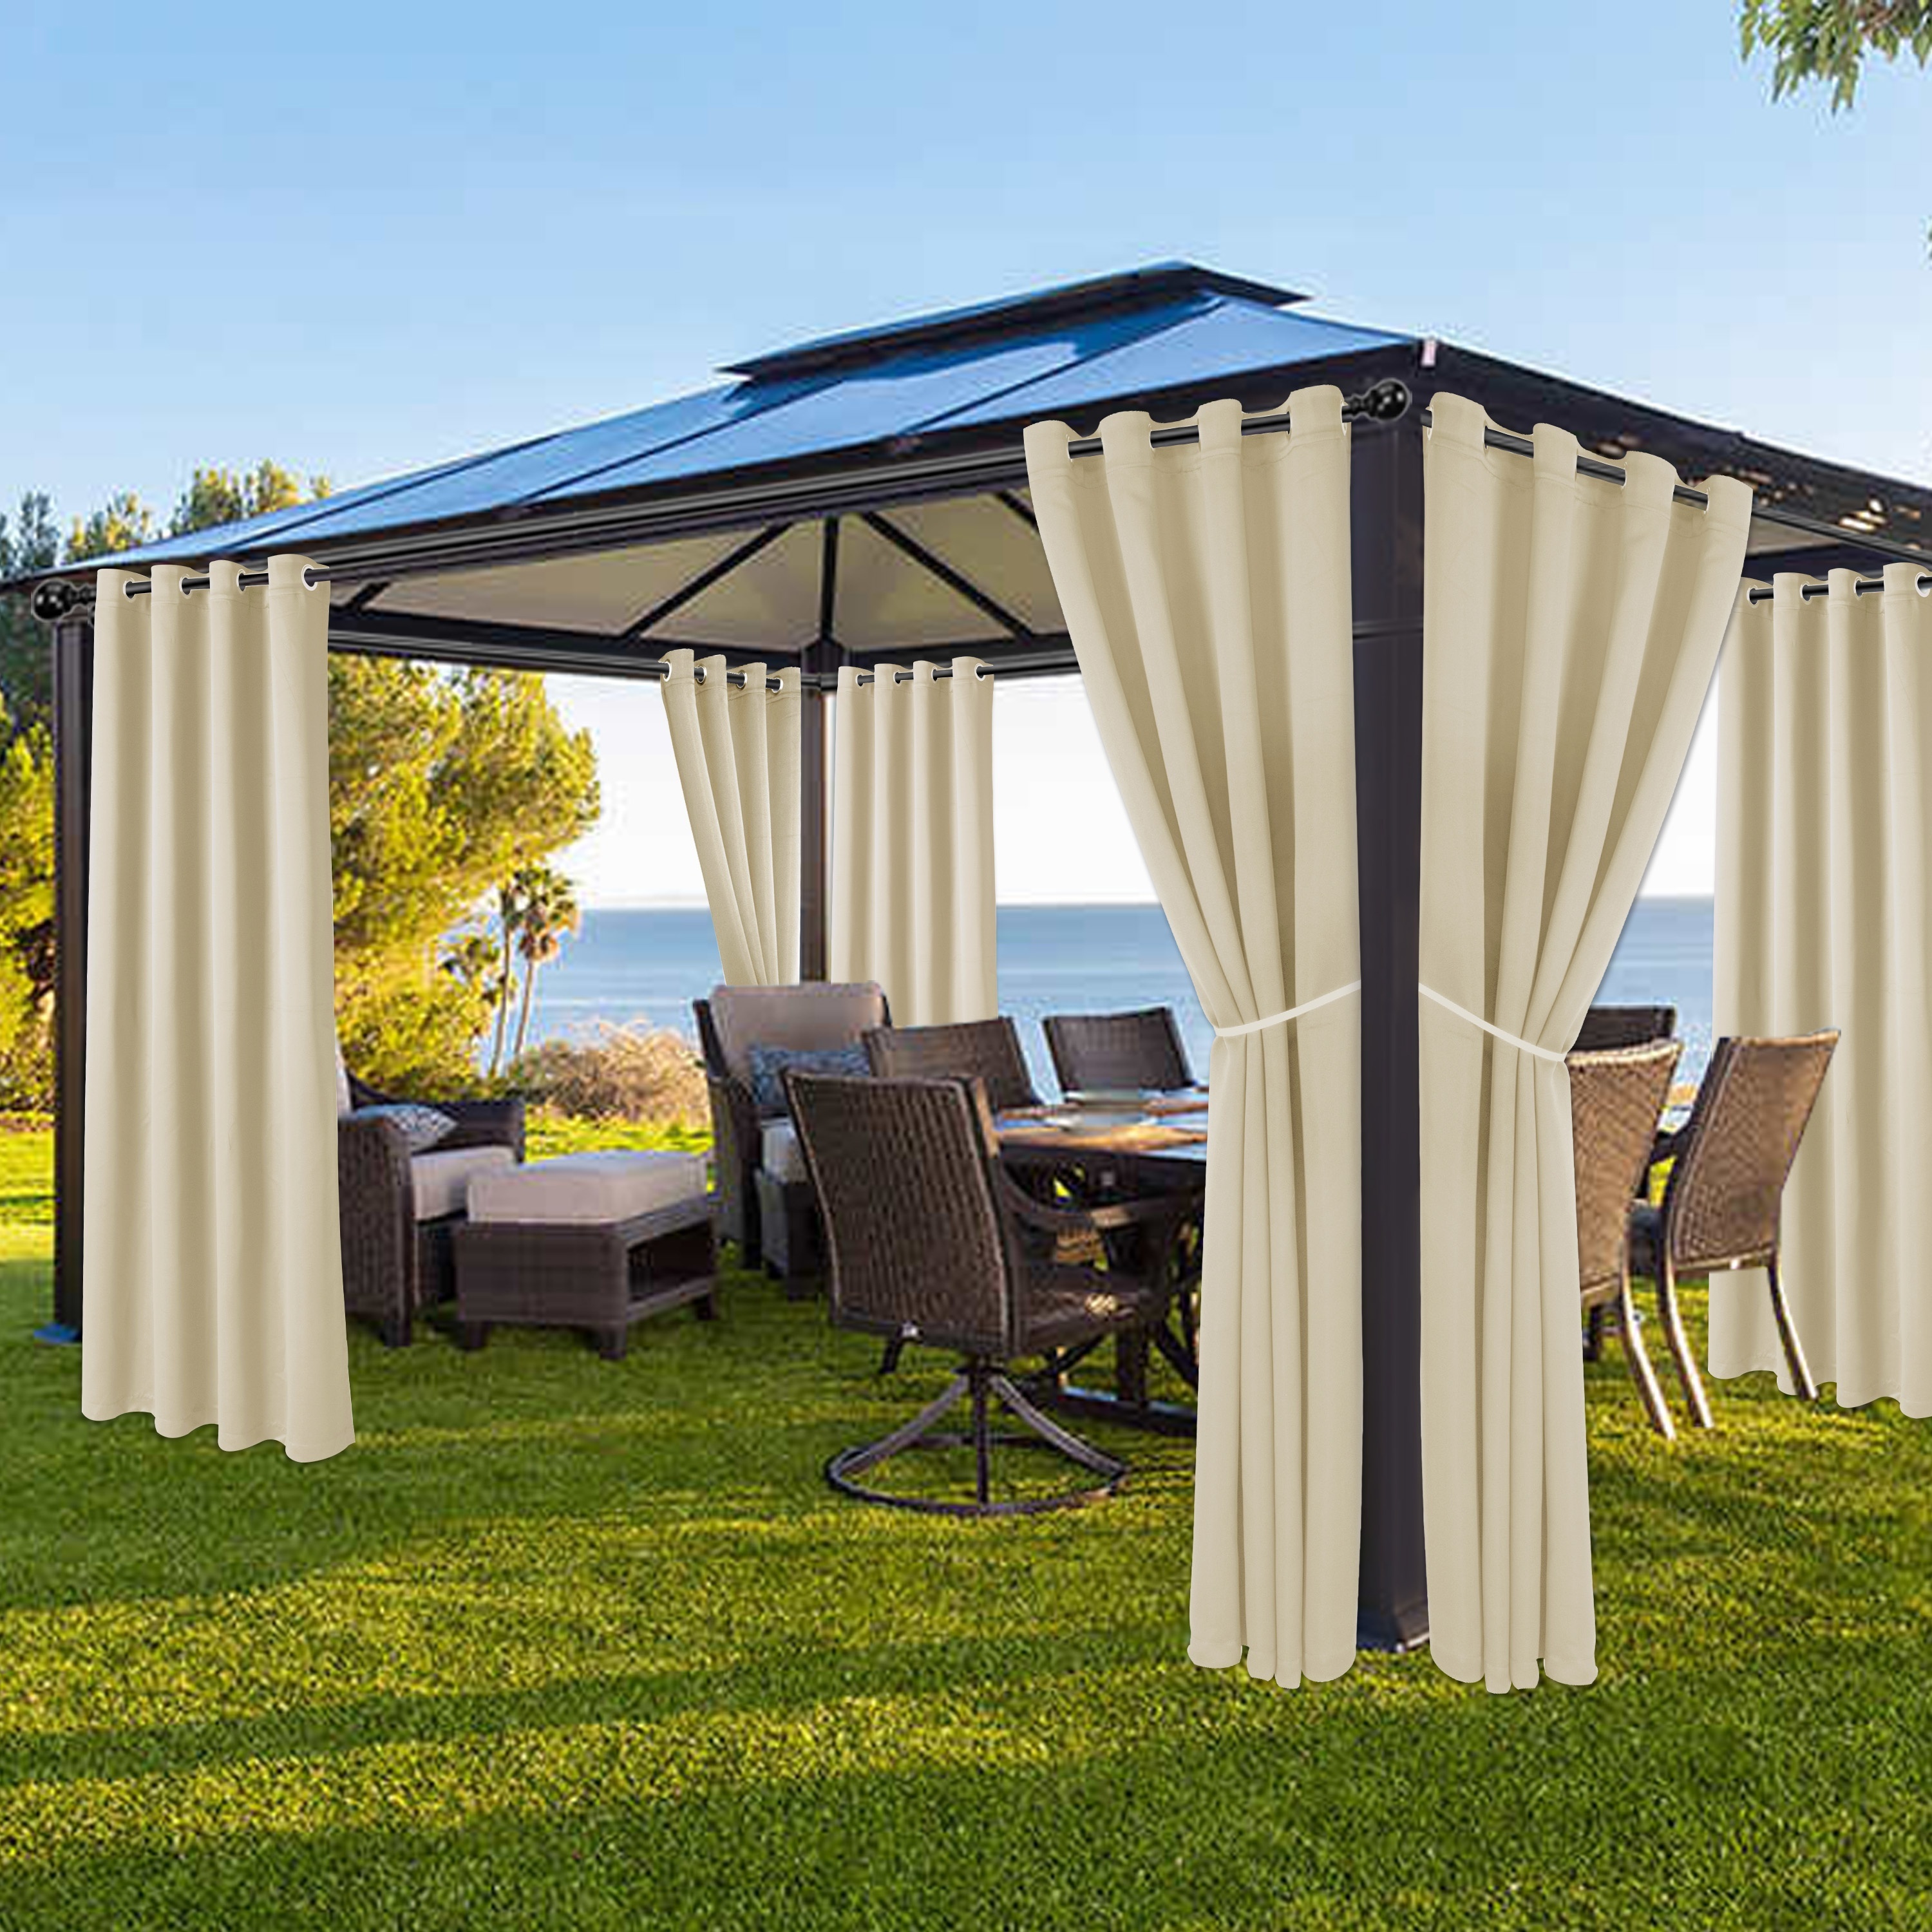 Cortina para exteriores impermeable para patio, aislamiento térmico,  bloqueo de luz solar UV, resistente al viento, cortina exterior para